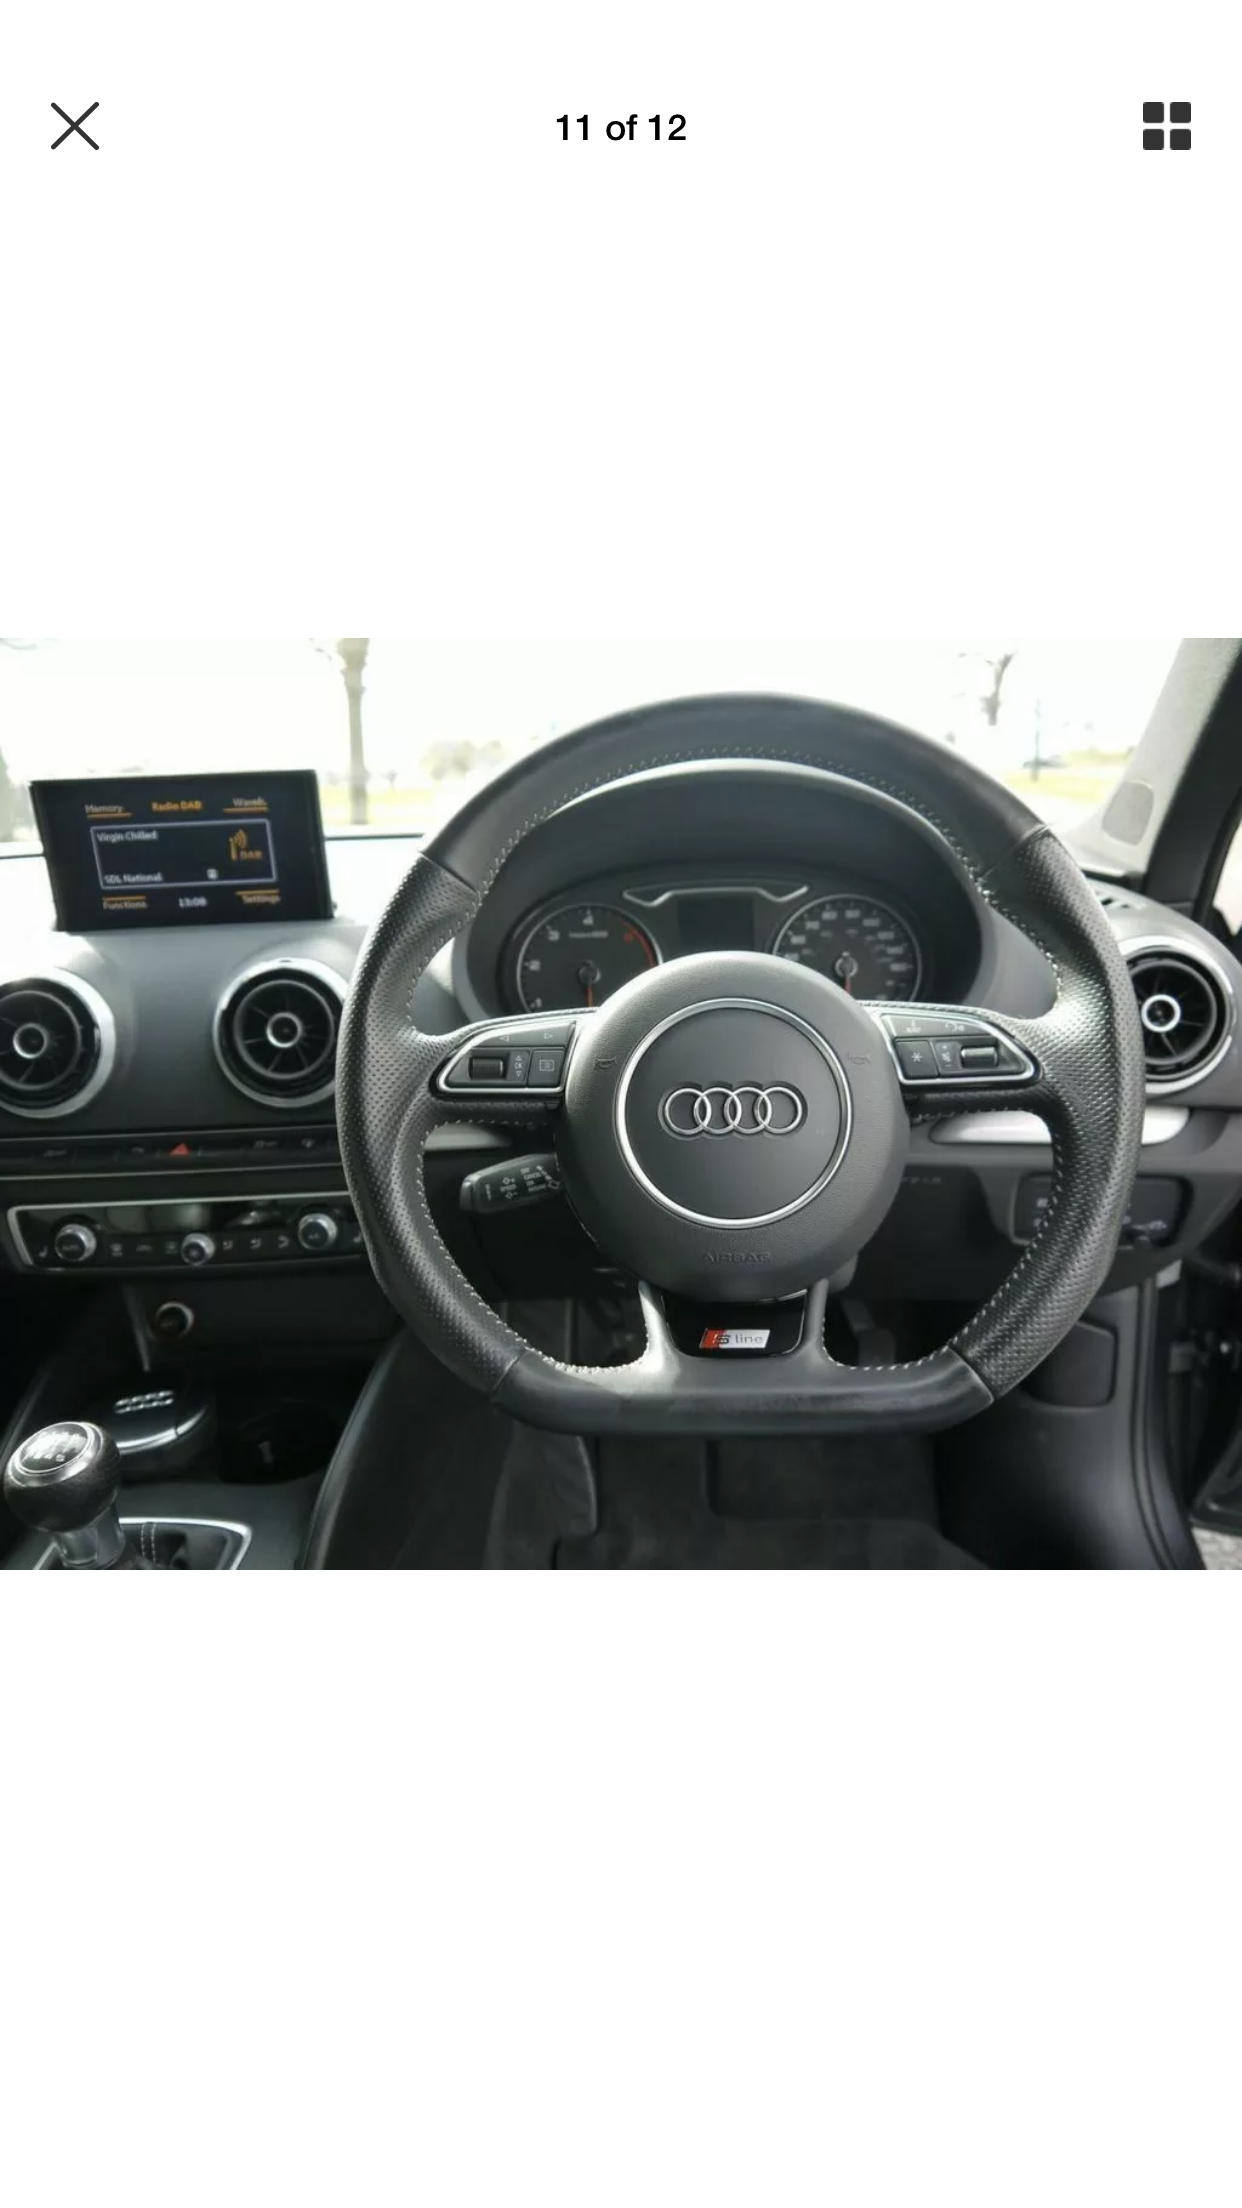 Current steering wheel